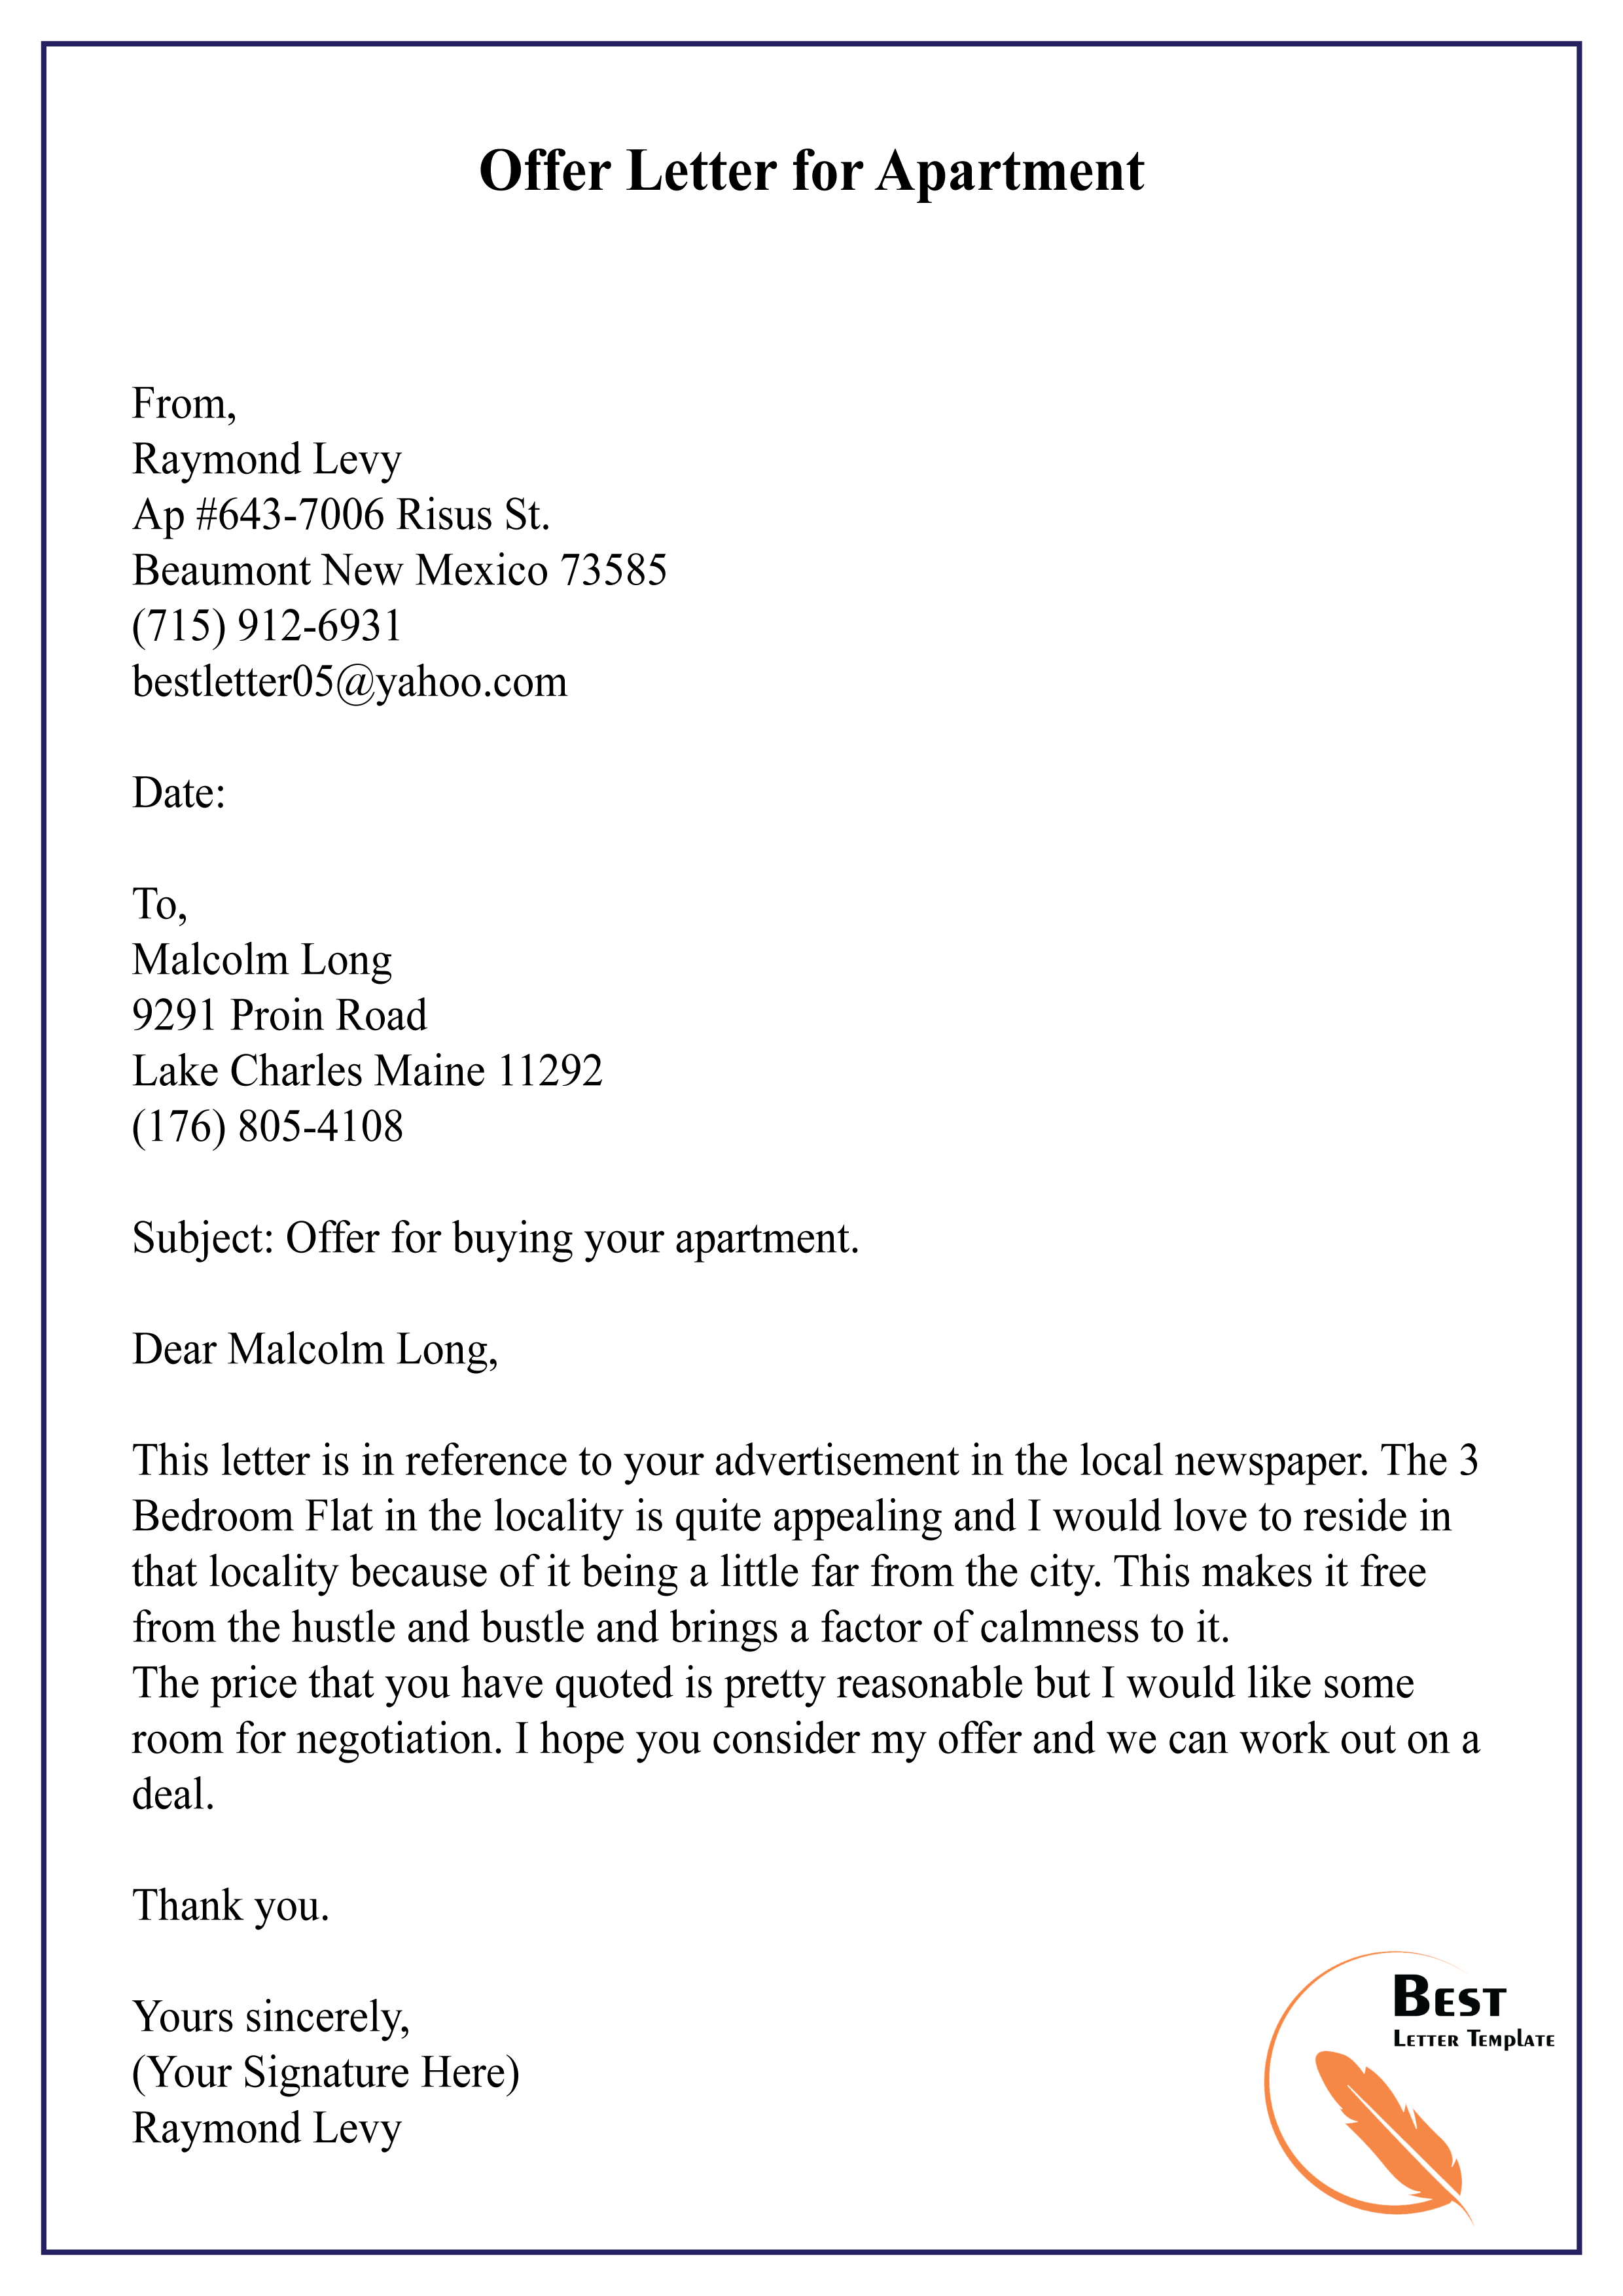 Offer Letter for Apartment 01 Best Letter Template